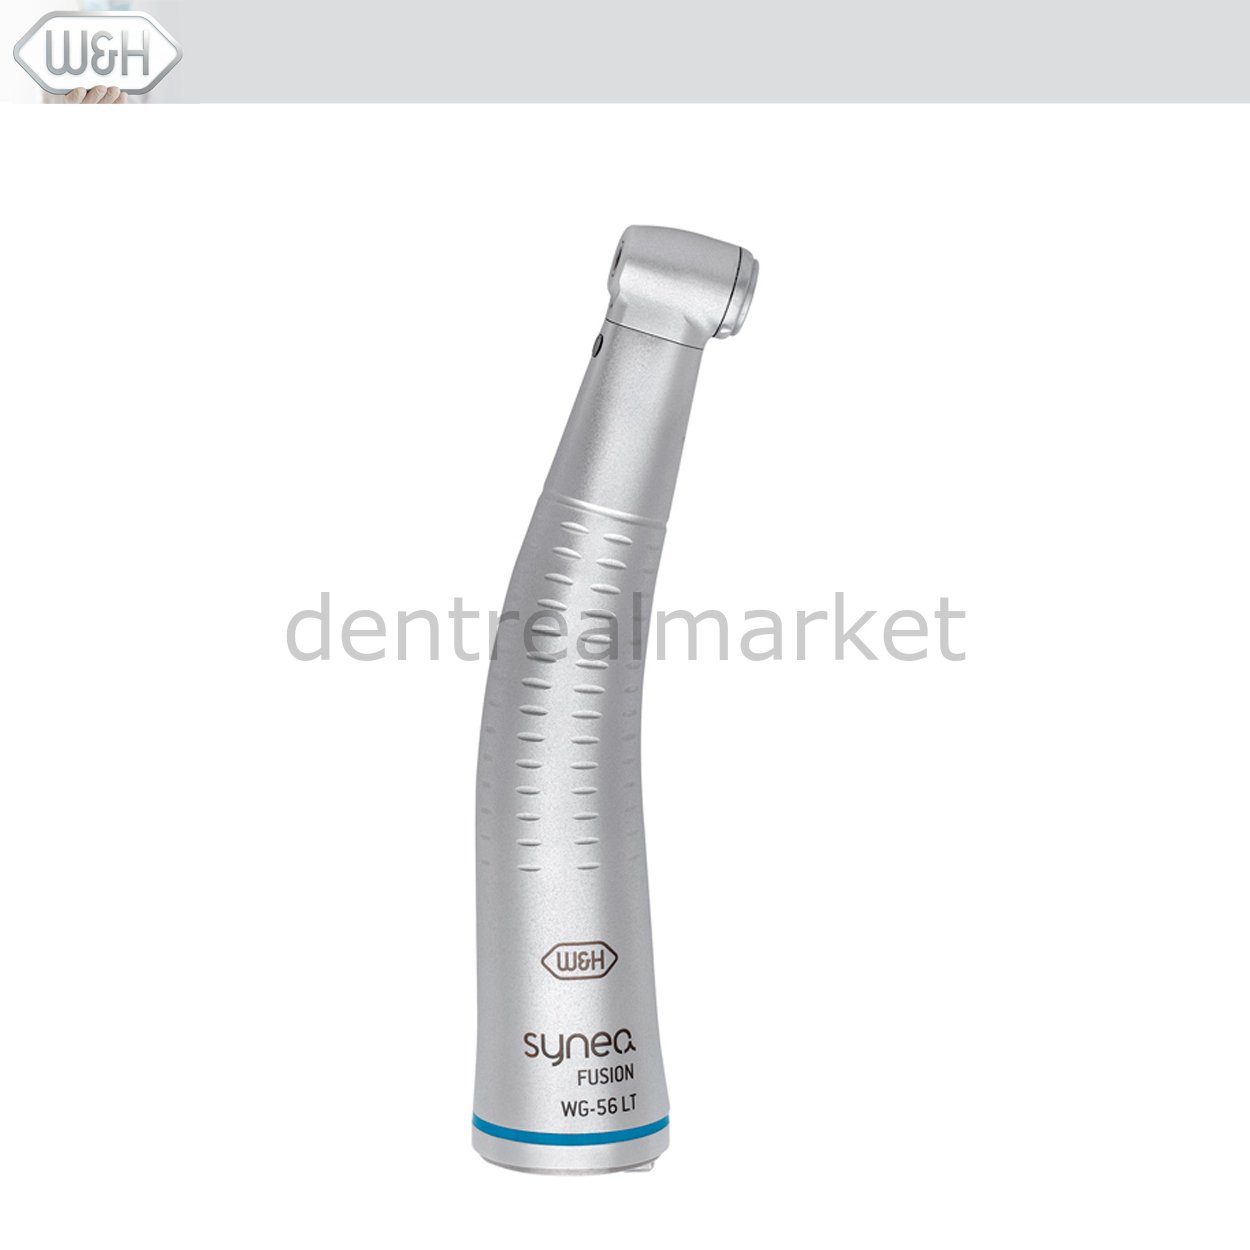 Dentrealmarket | W&H Dental Synea Fusion Anguldurva Işıklı - WG-56LT